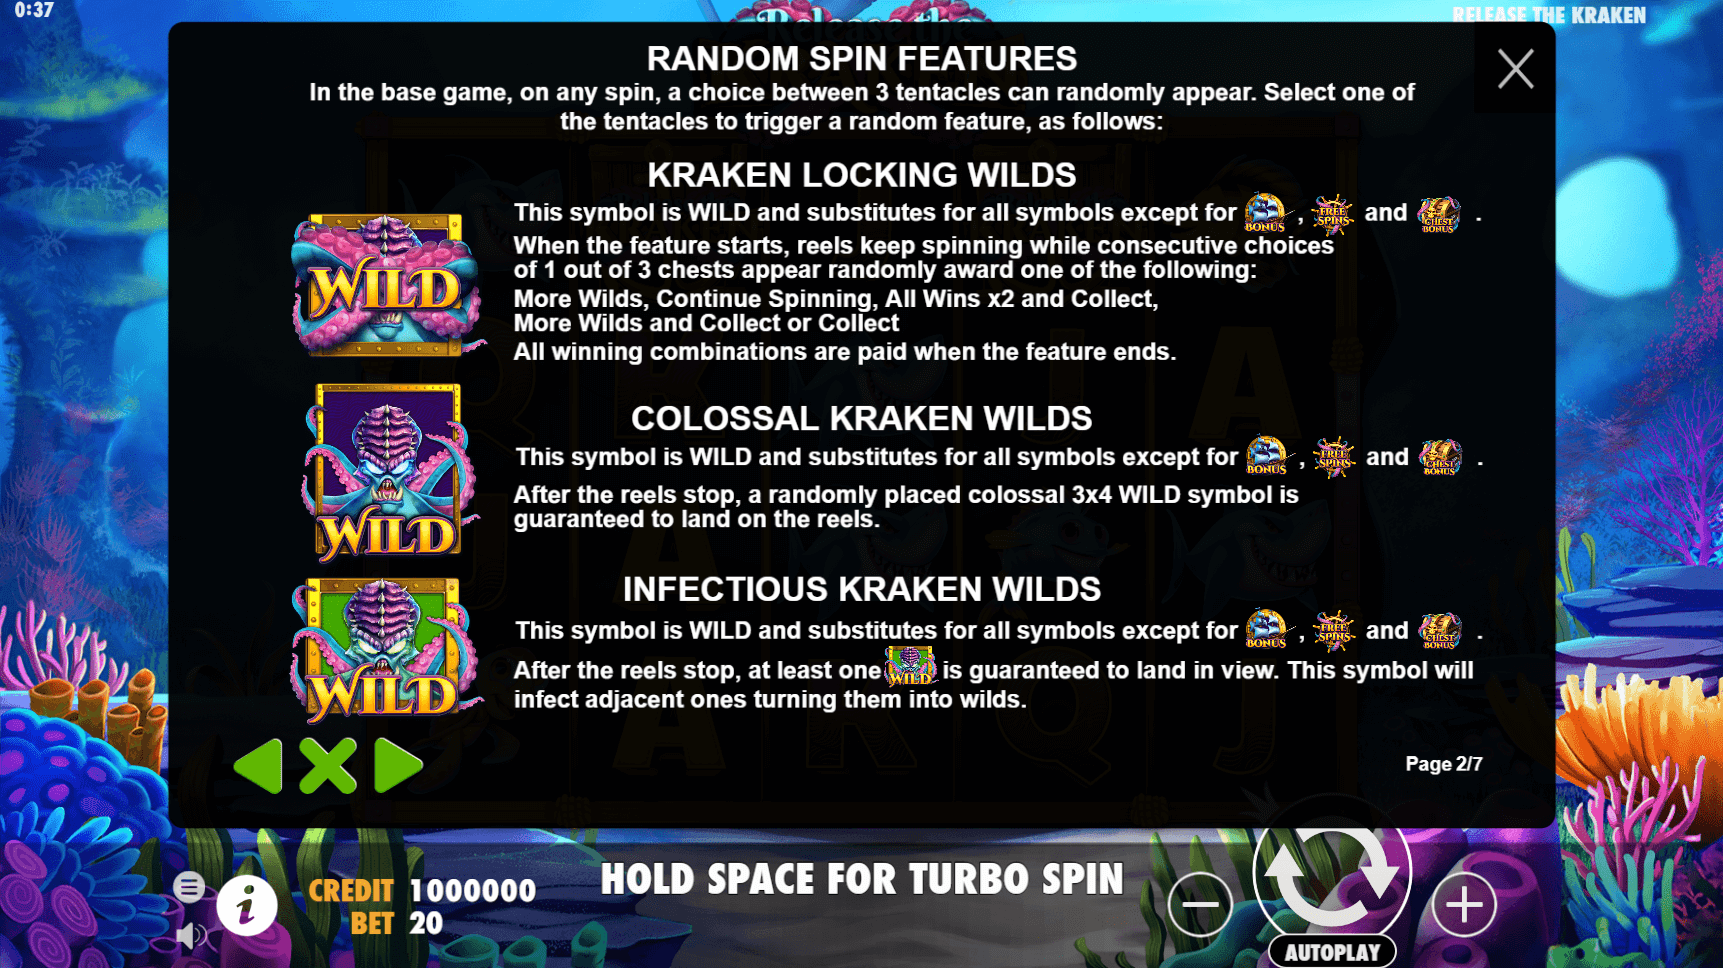 release the kraken slot machine detail image 1